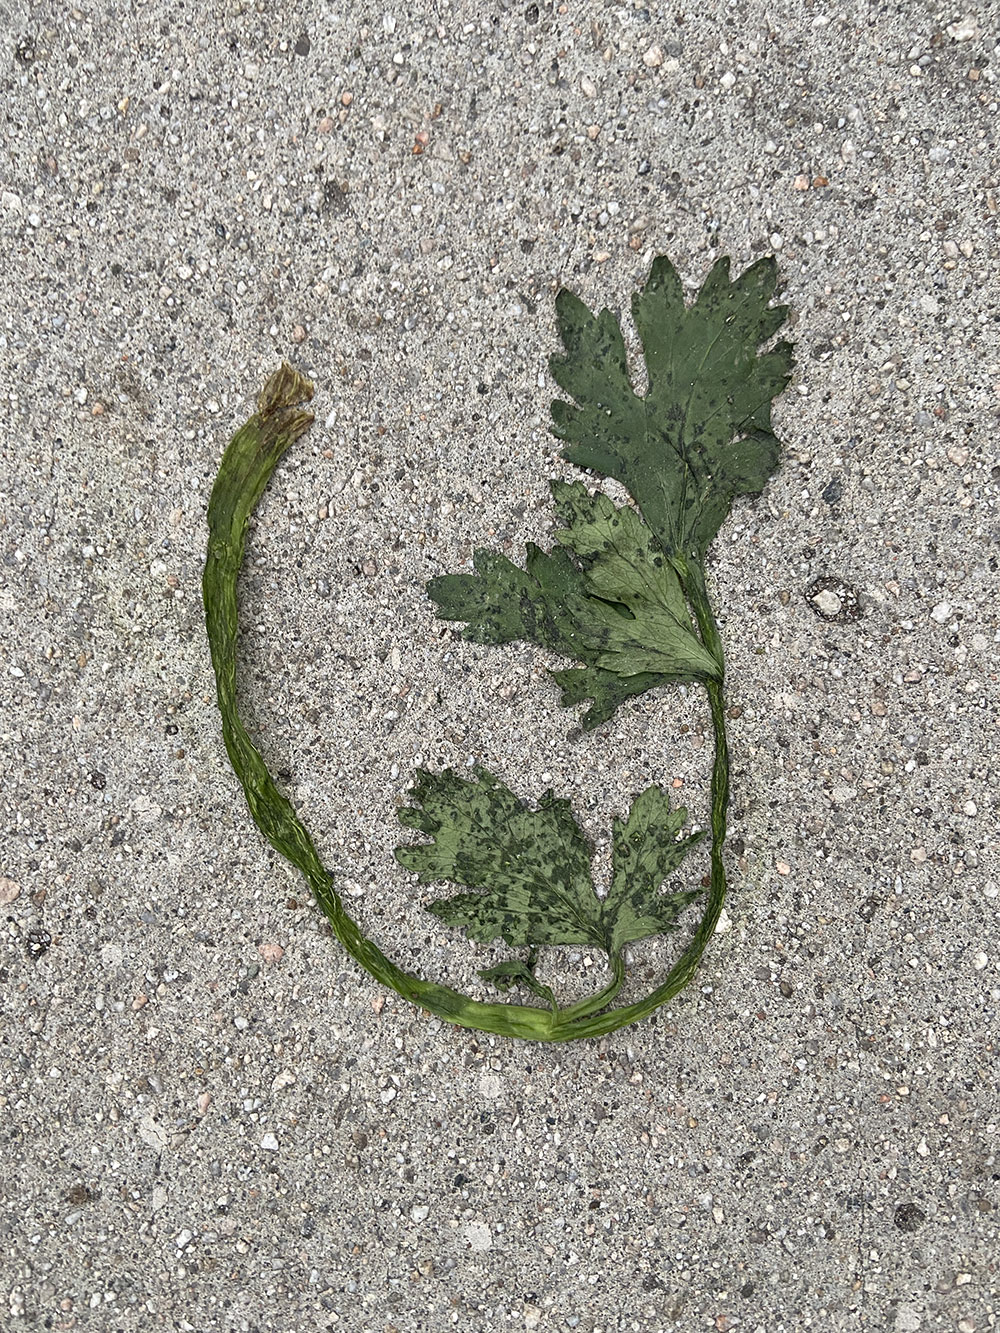 flattened sprig of parsley